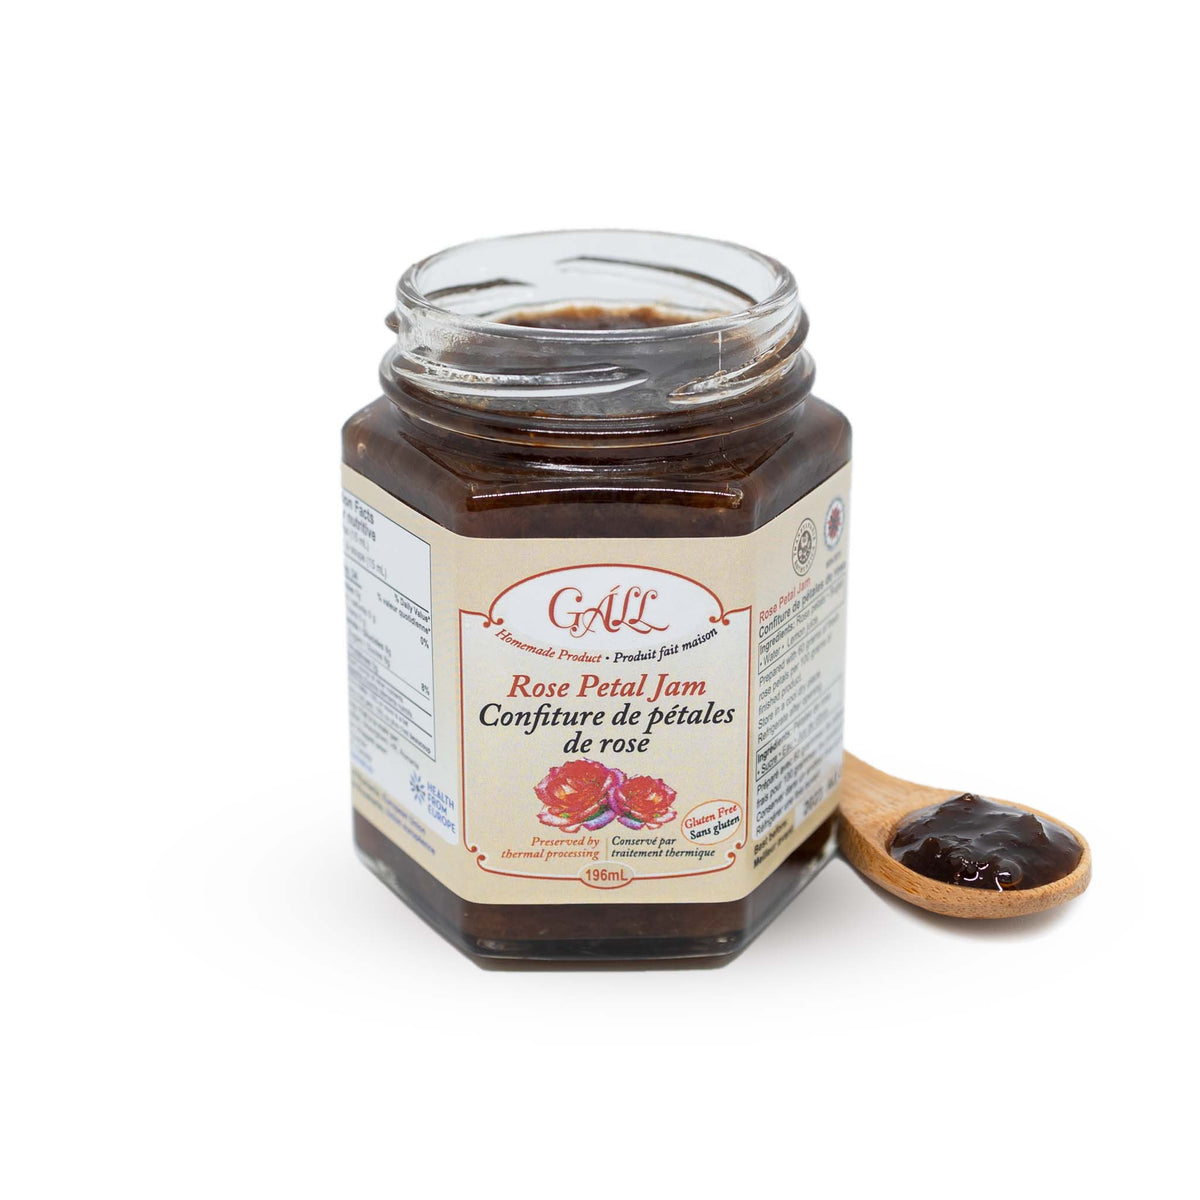 Artisanal Rose Petal Jam open jar spoon Health from Europe